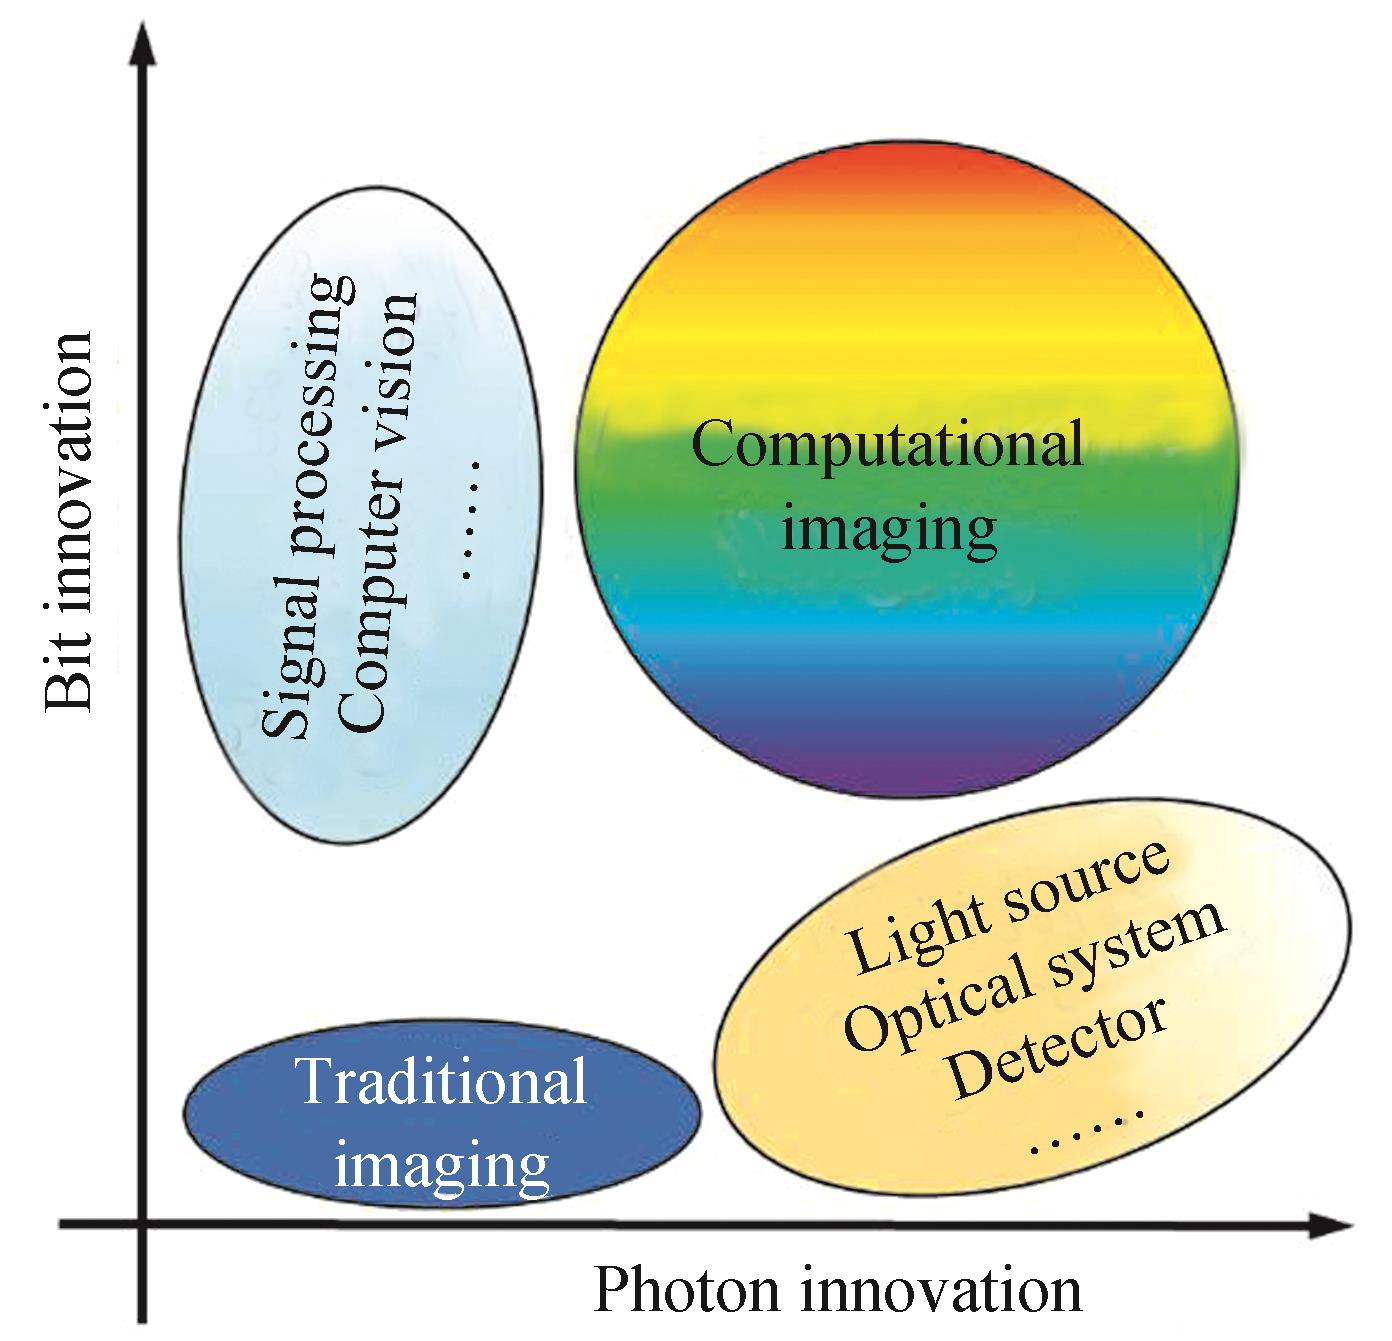 Computational imaging technology combining optics and informatics